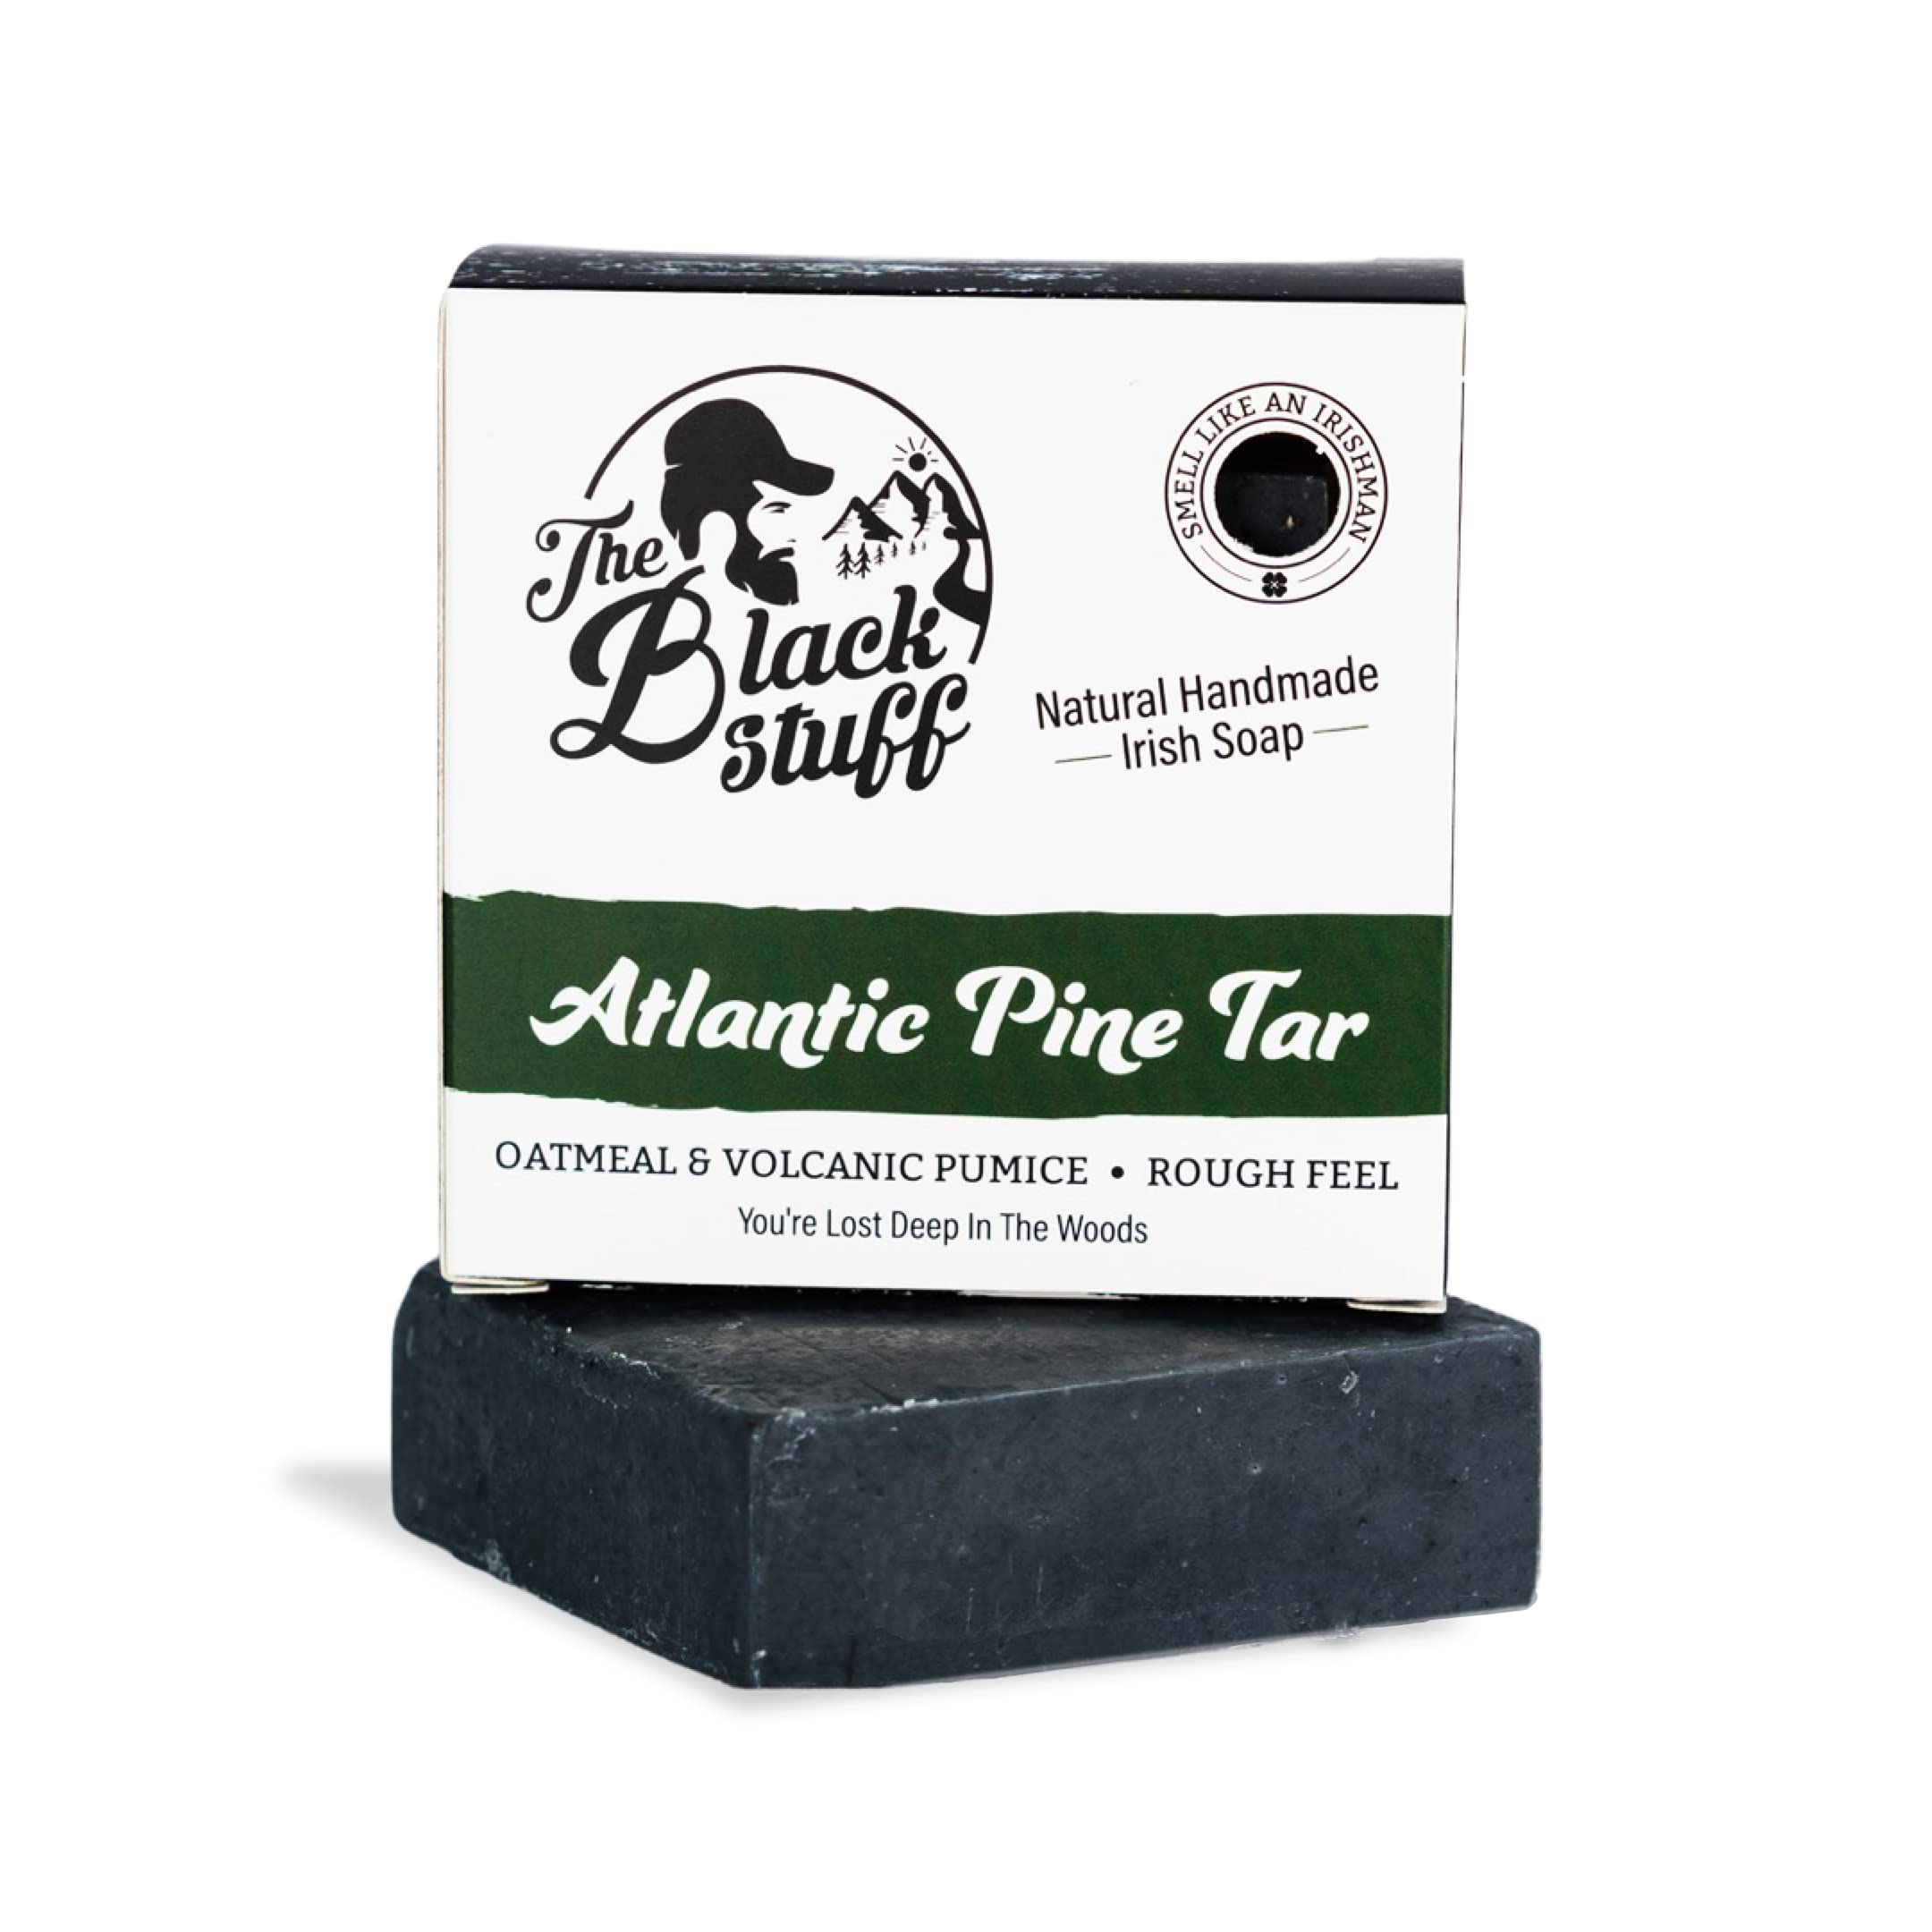 Pine Tar Bar Soap, Men's Soap, Natural Soap for Men